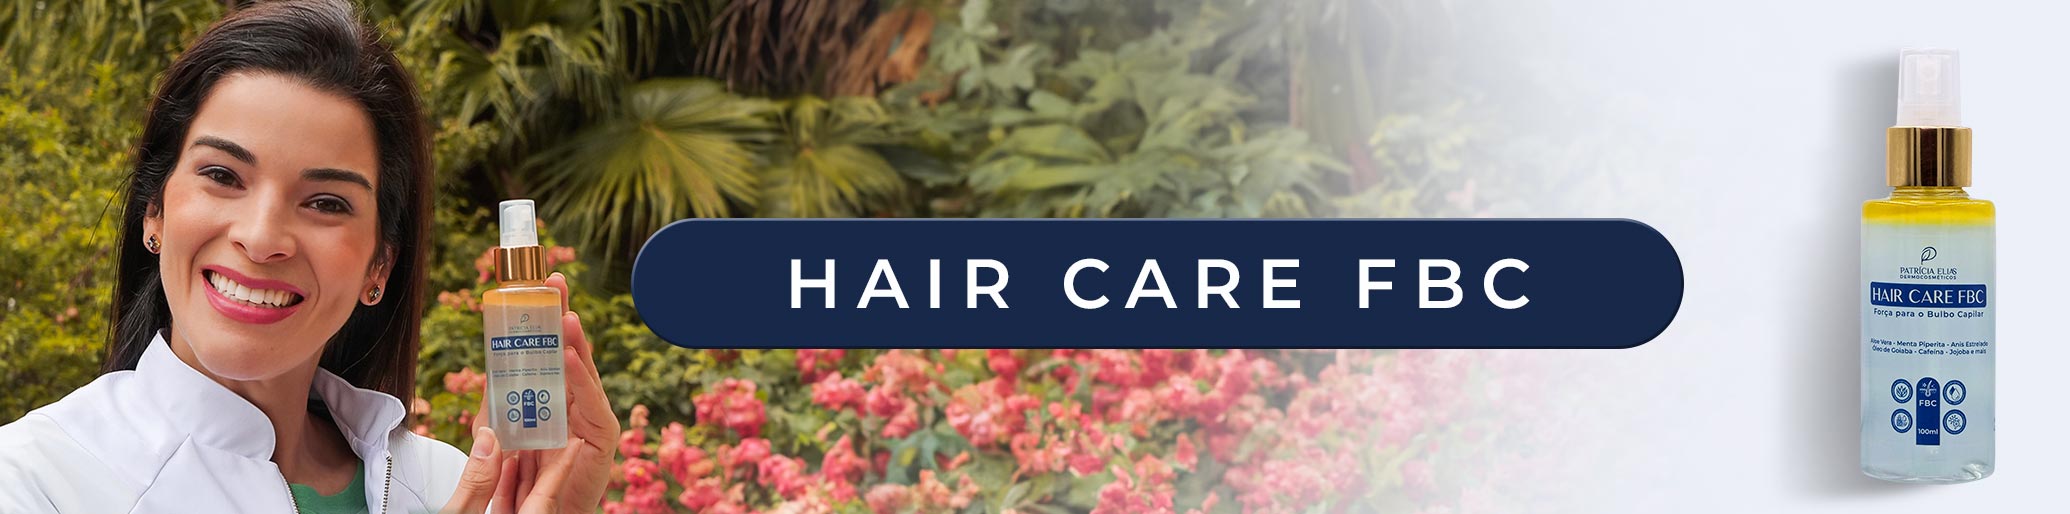 banner hair care